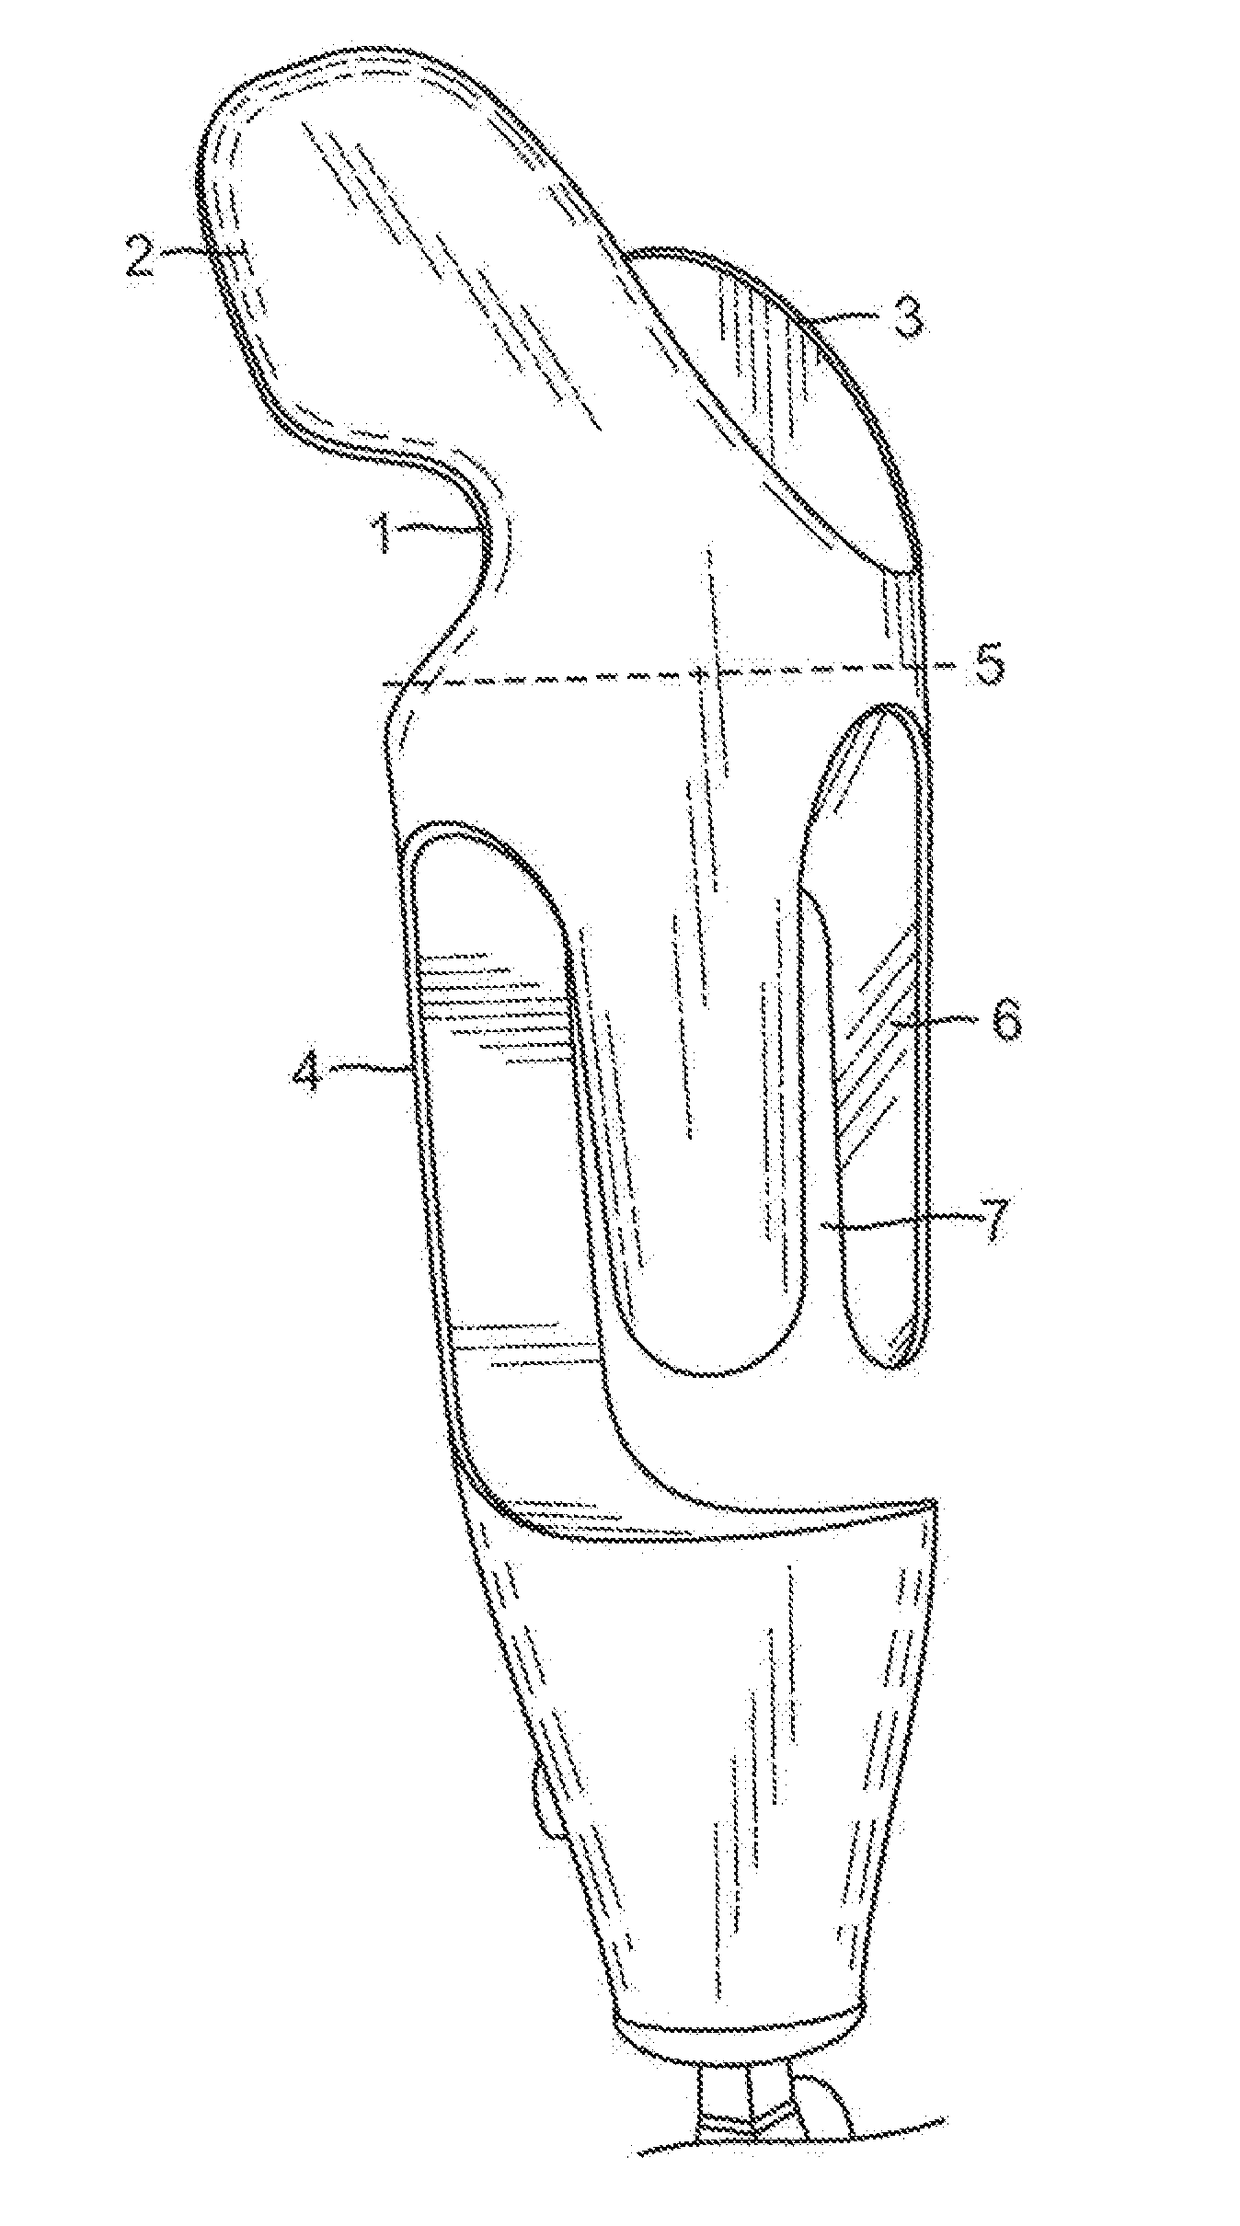 Method of manufacturing prosthetic socket interface